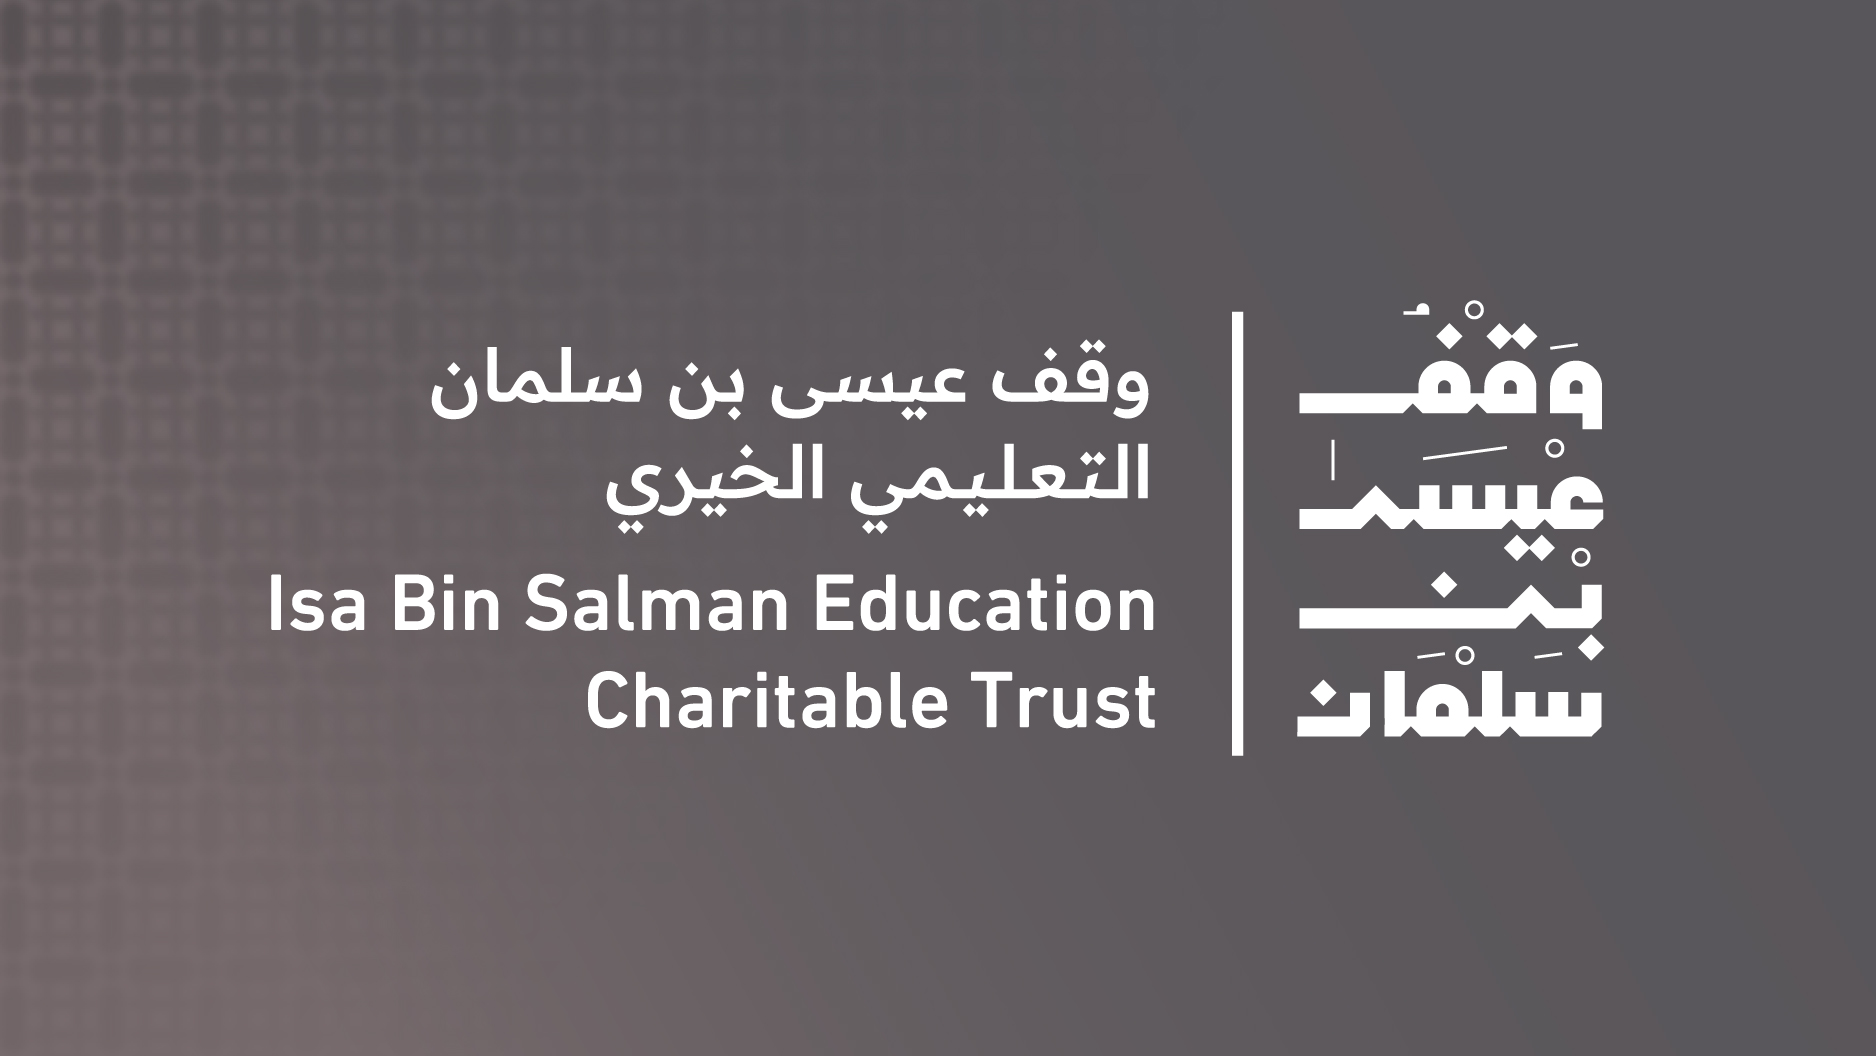 The Isa bin Salman Education Charitable Trust opens scholarship applications on 3 July